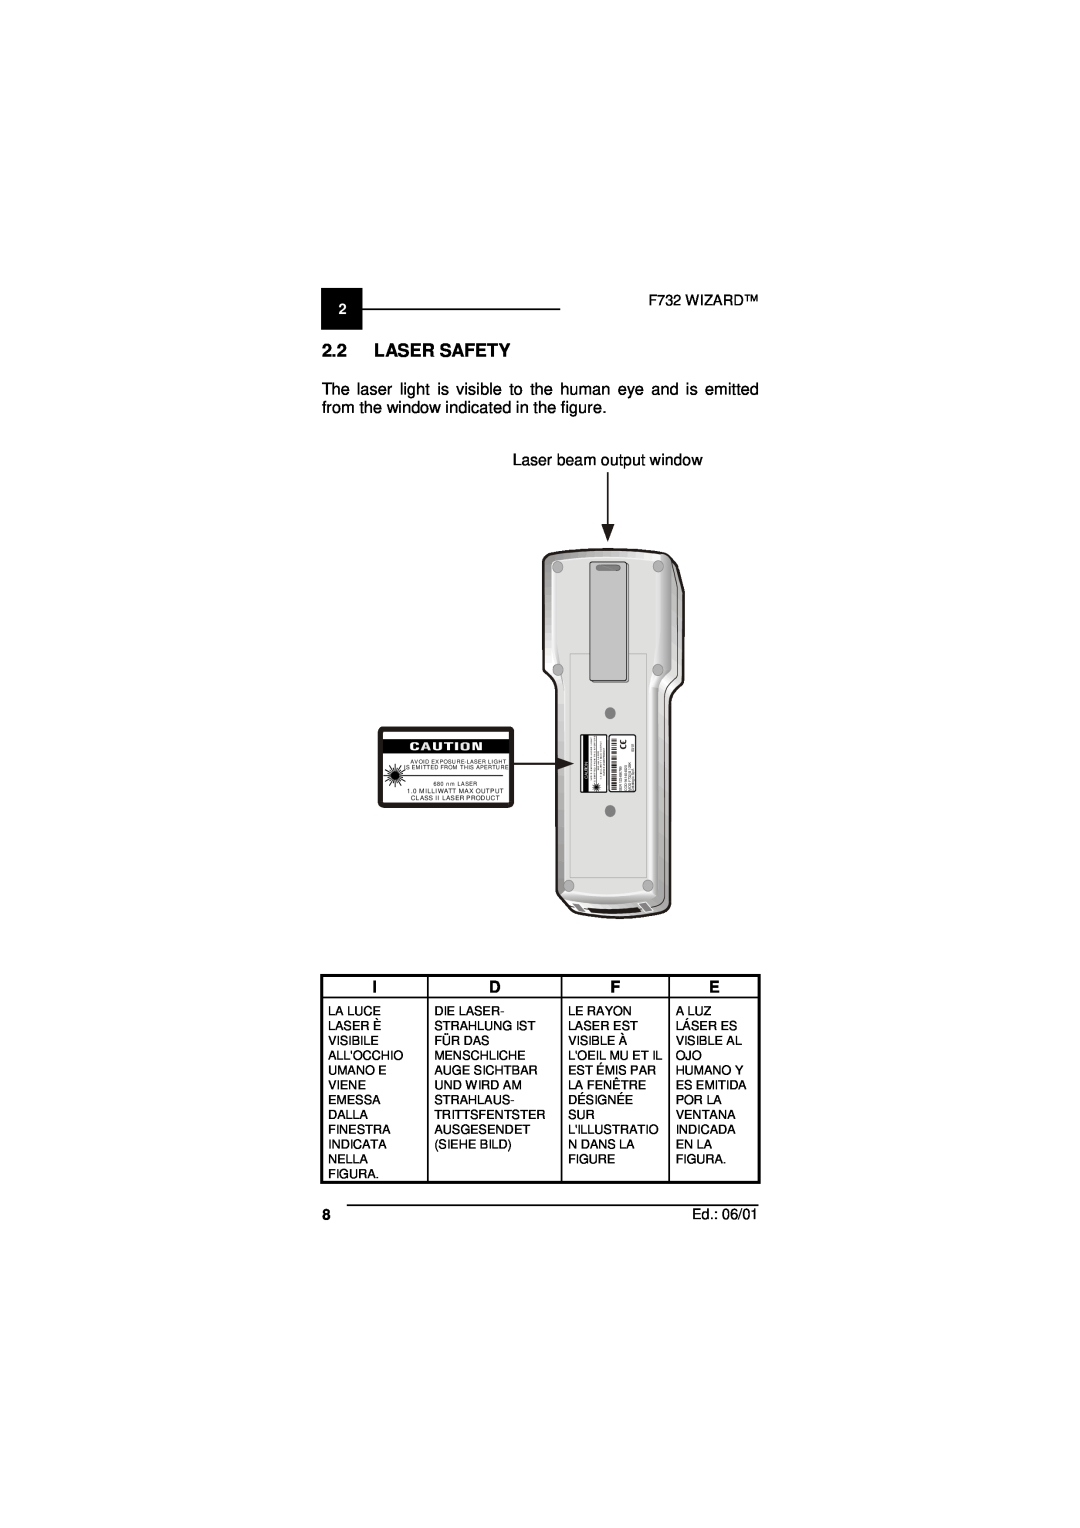 Datalogic Scanning user manual Laser Safety, F732 WIZARD, Ed. 06/01 